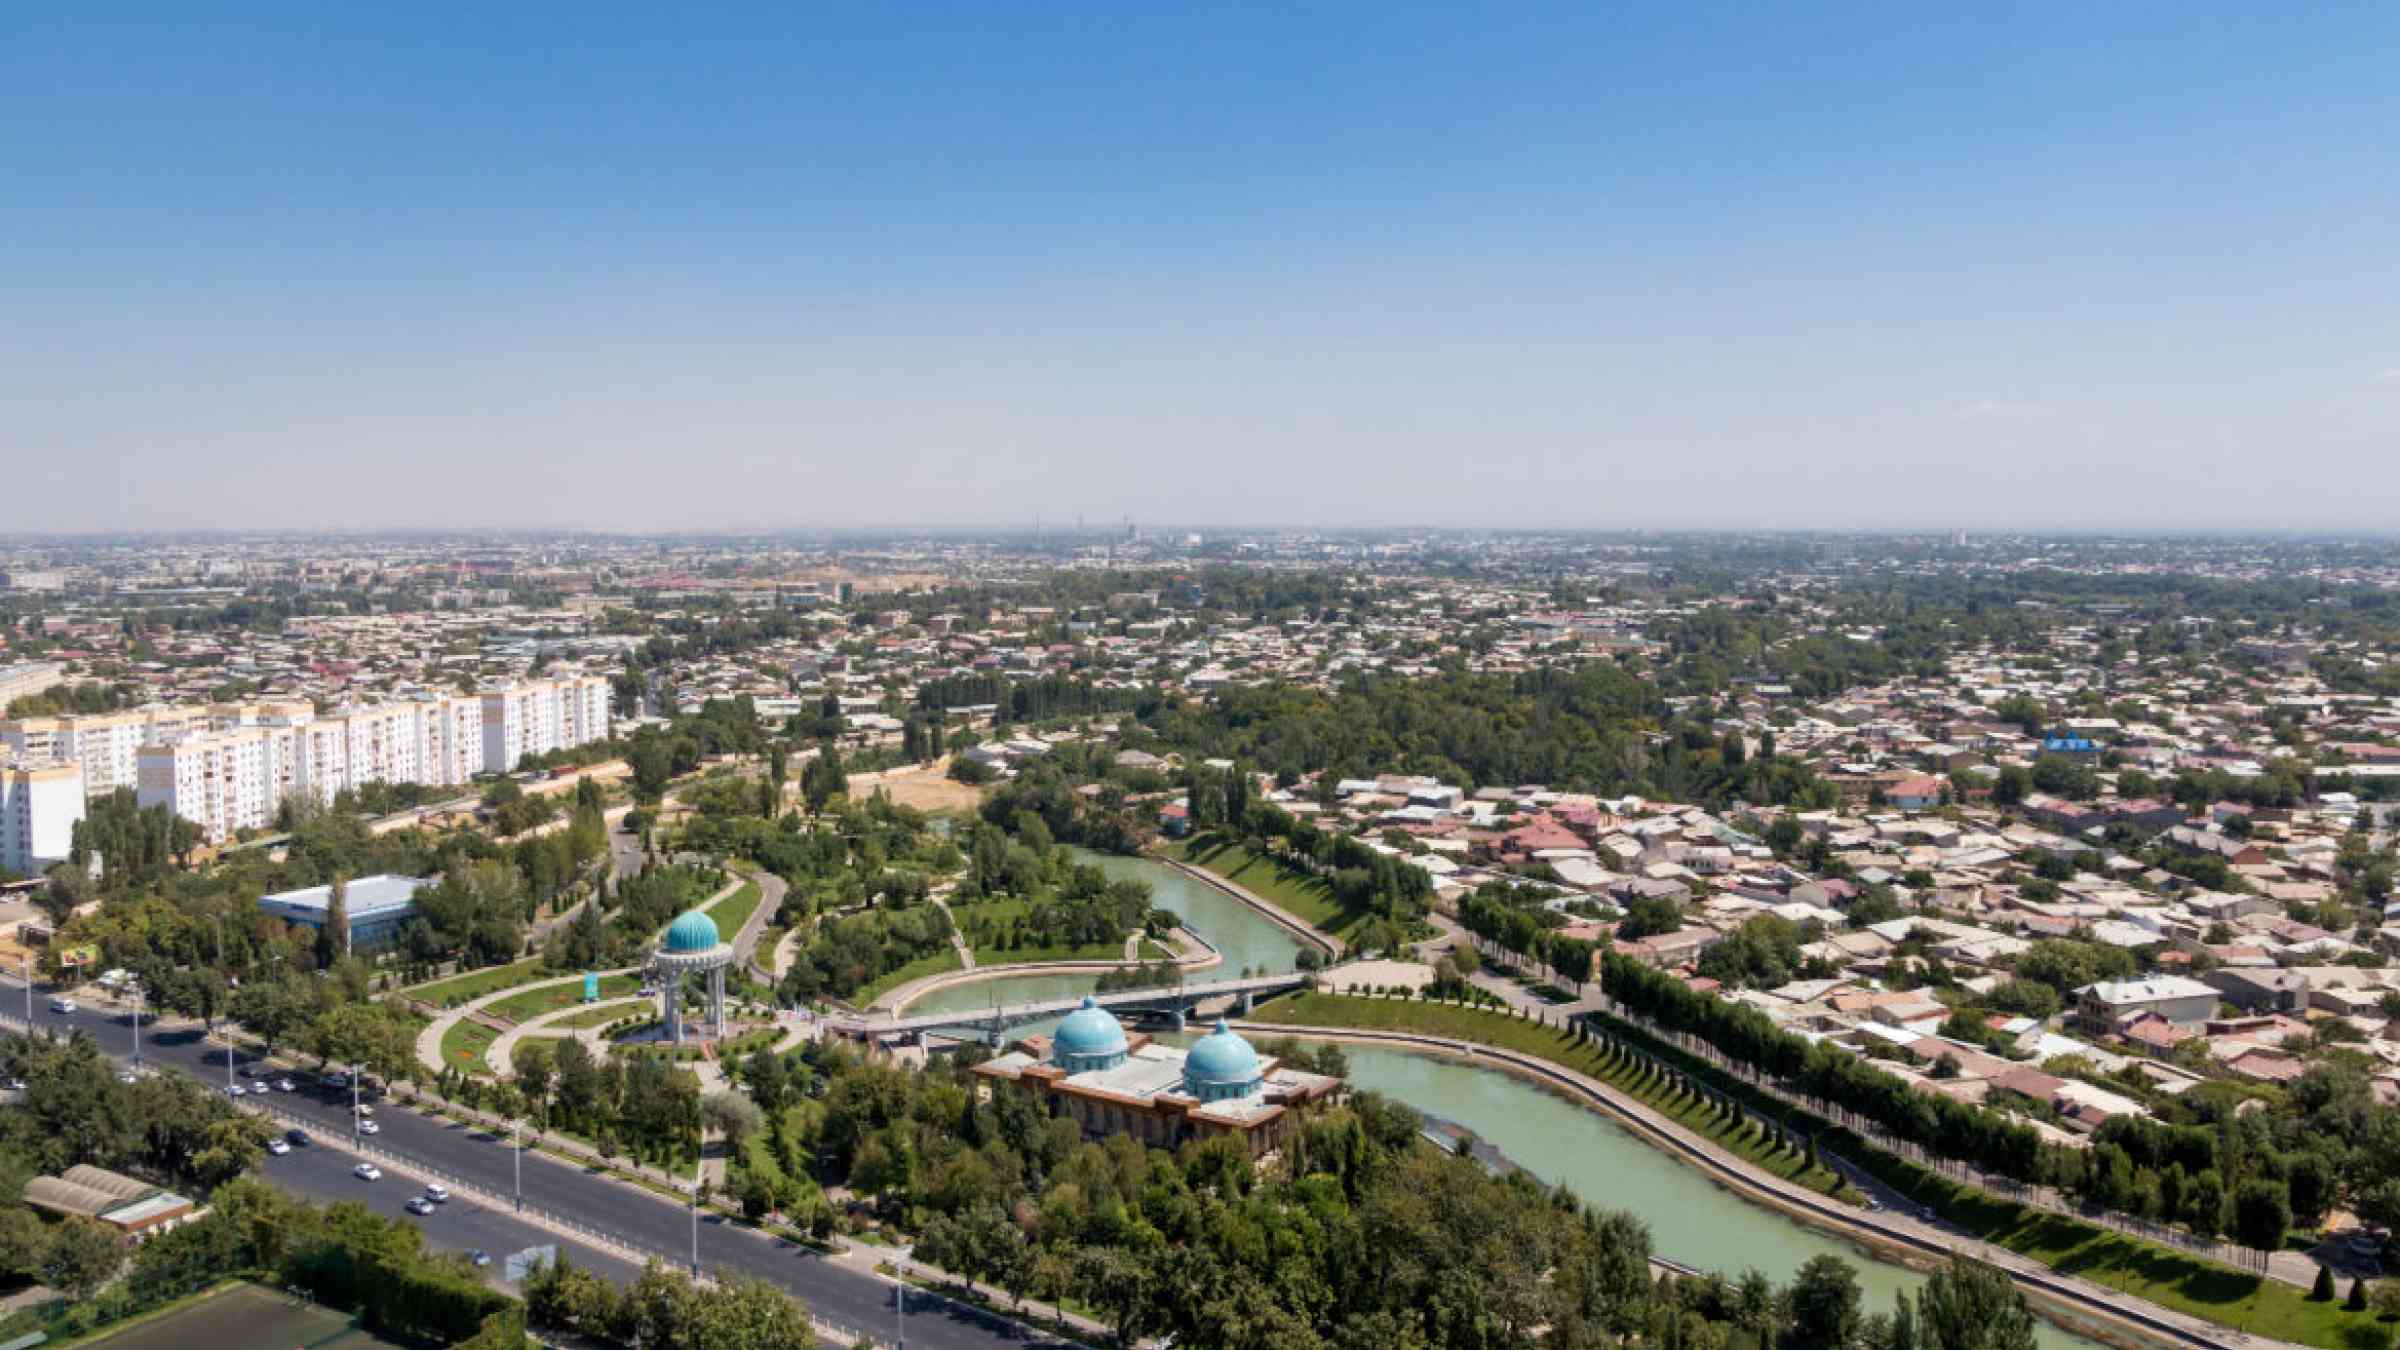 Aerial view of Tashkent, Uzbekistan